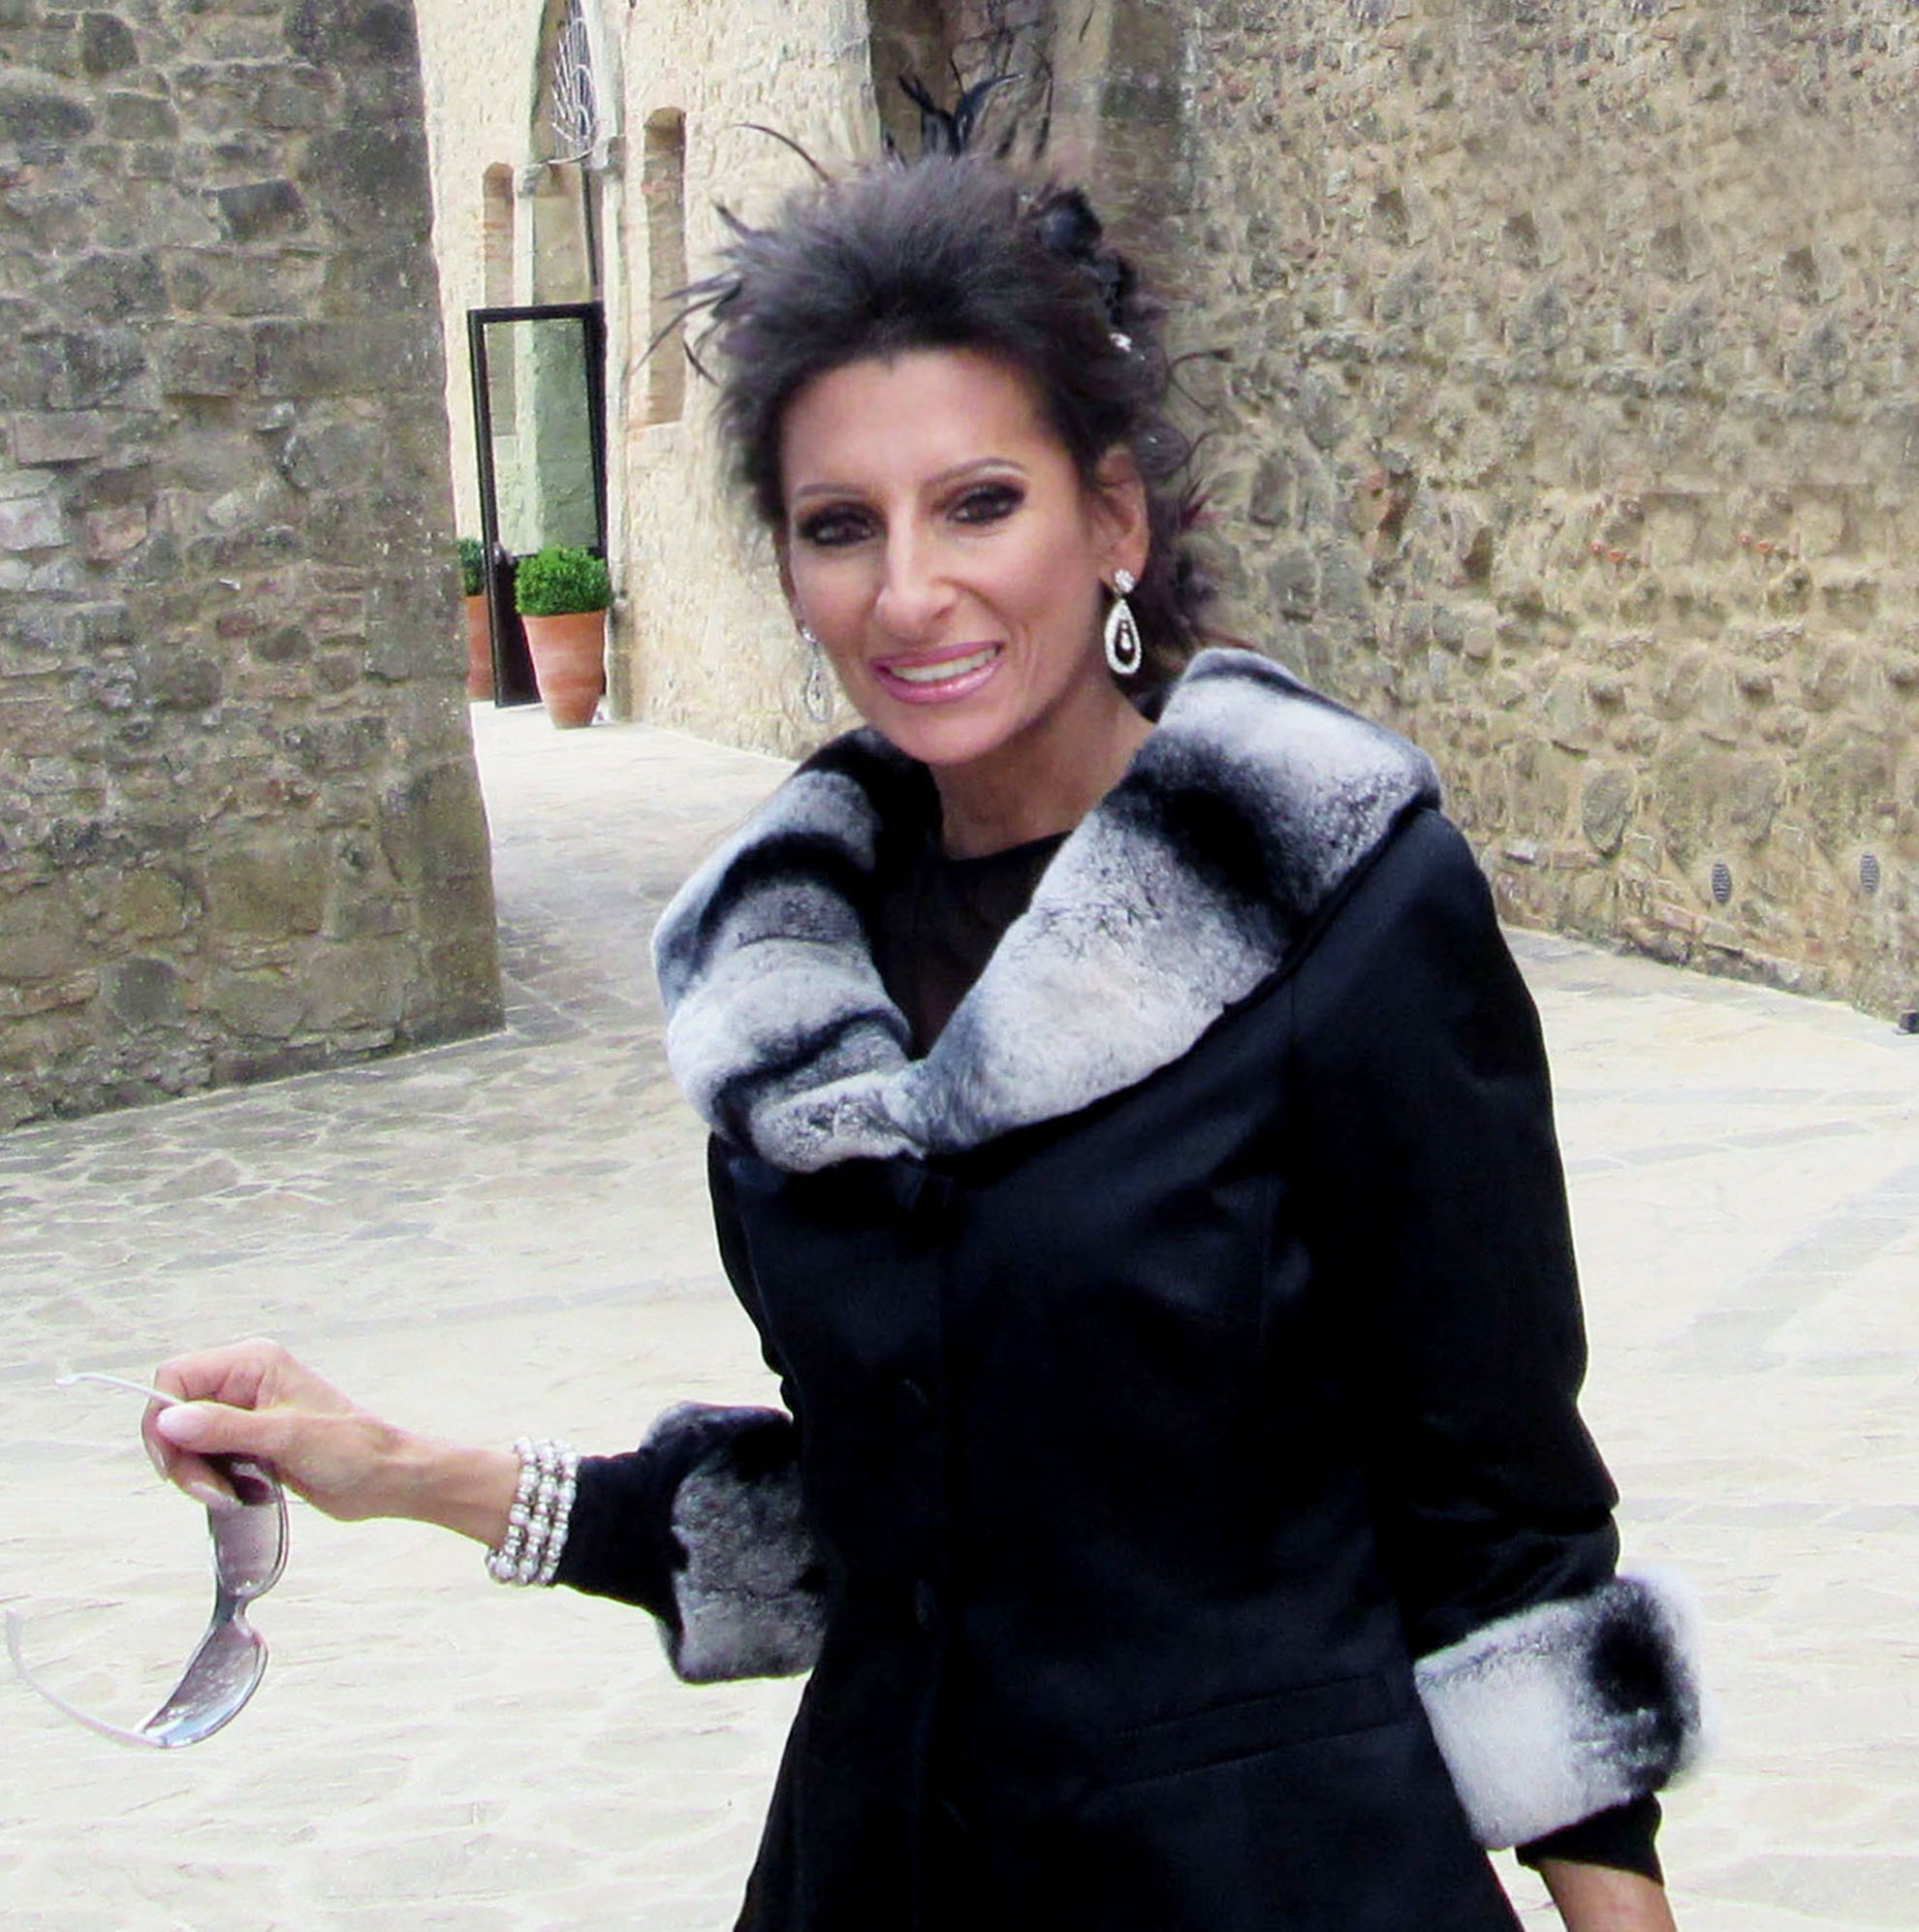 Lucia Aliberti⚘Castle of Solfagnano⚘Perugia⚘Special Event⚘Guest⚘Portrait Series⚘:http://www.luciaaliberti.it #luciaaliberti #castleofsolfagnano #perugia #specialevent #portraitseries #guest